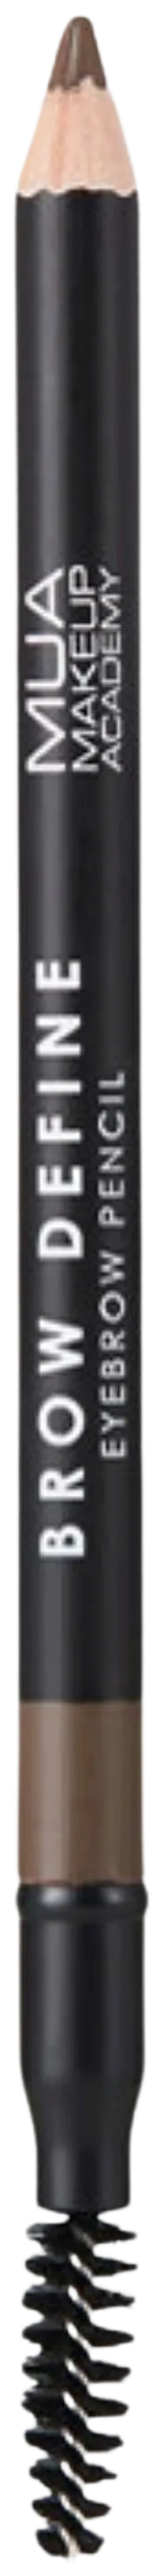 MUA Make Up Academy Brow Define Eyebrow Pencil 1,2 g Mid Brown kulmakynä - 1